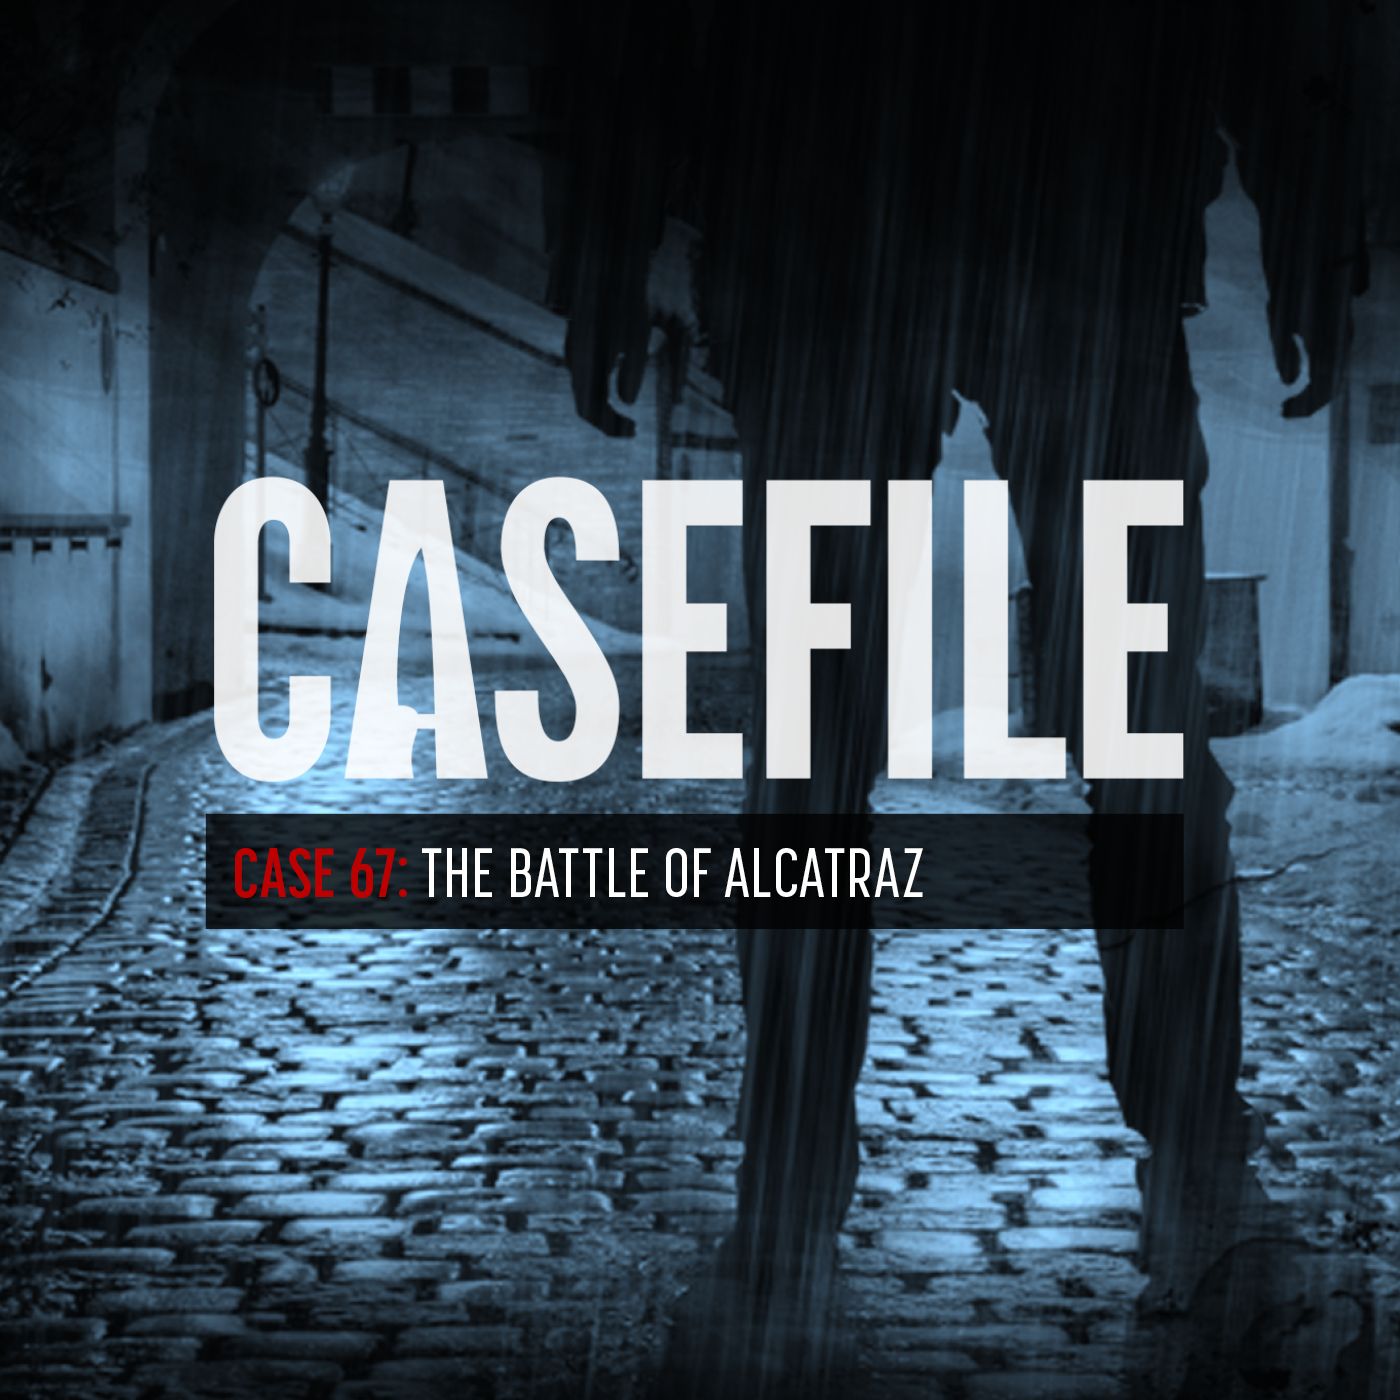 Case 67: The Battle of Alcatraz